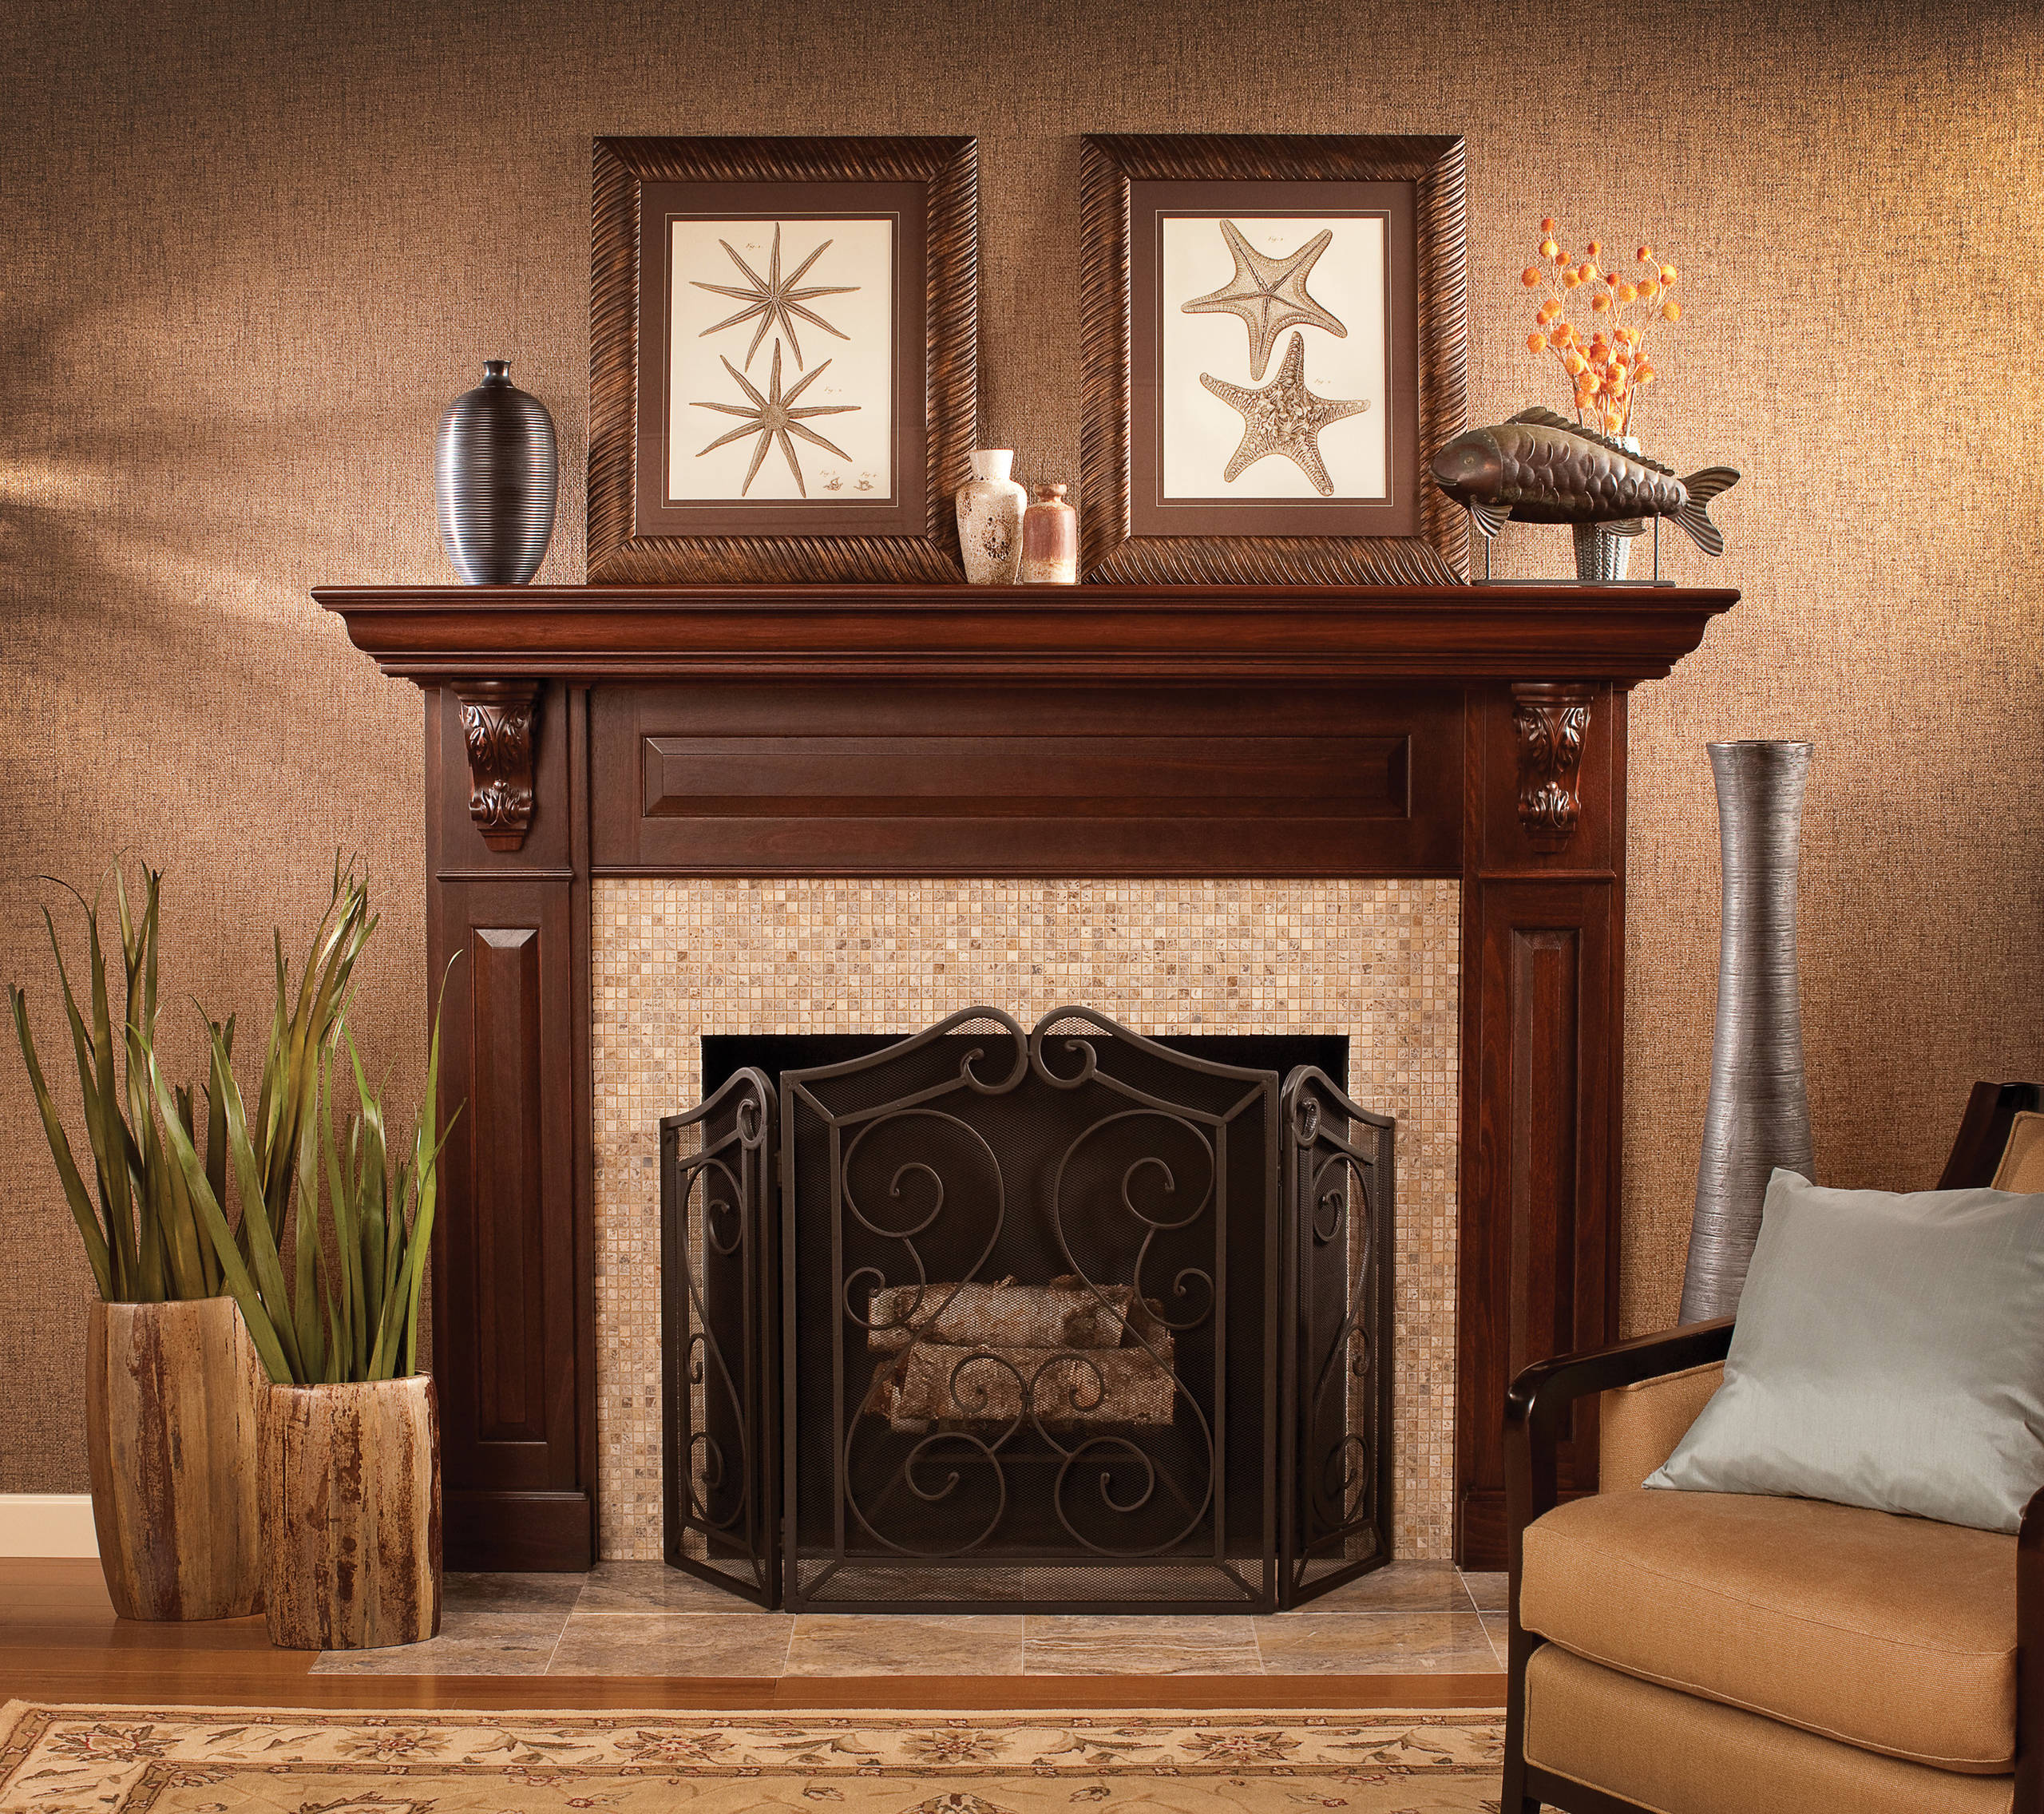 Fireplace Mantel Ideas - Photos & Ideas | Houzz